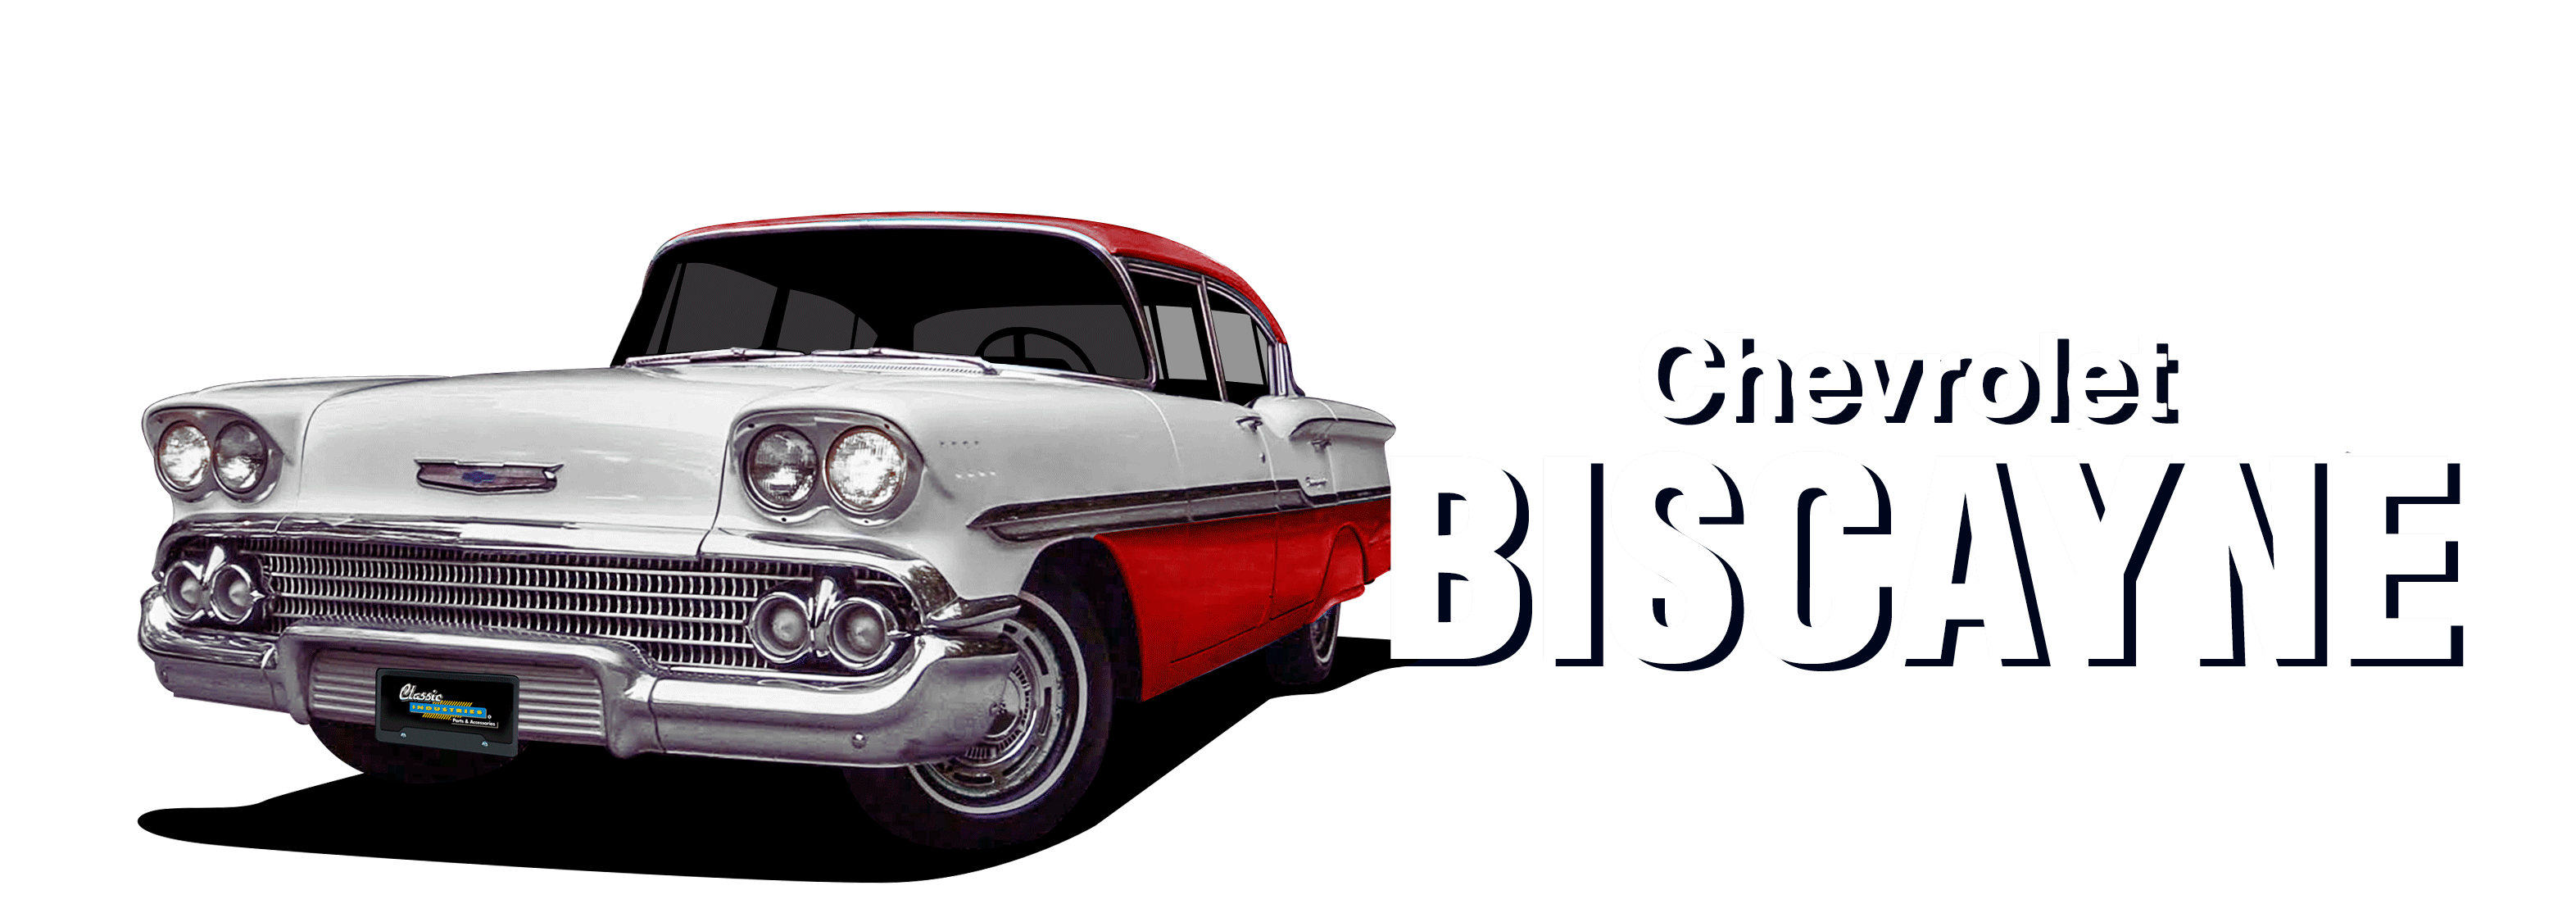 Chevy-biscayne-vehicle-desktop-2023